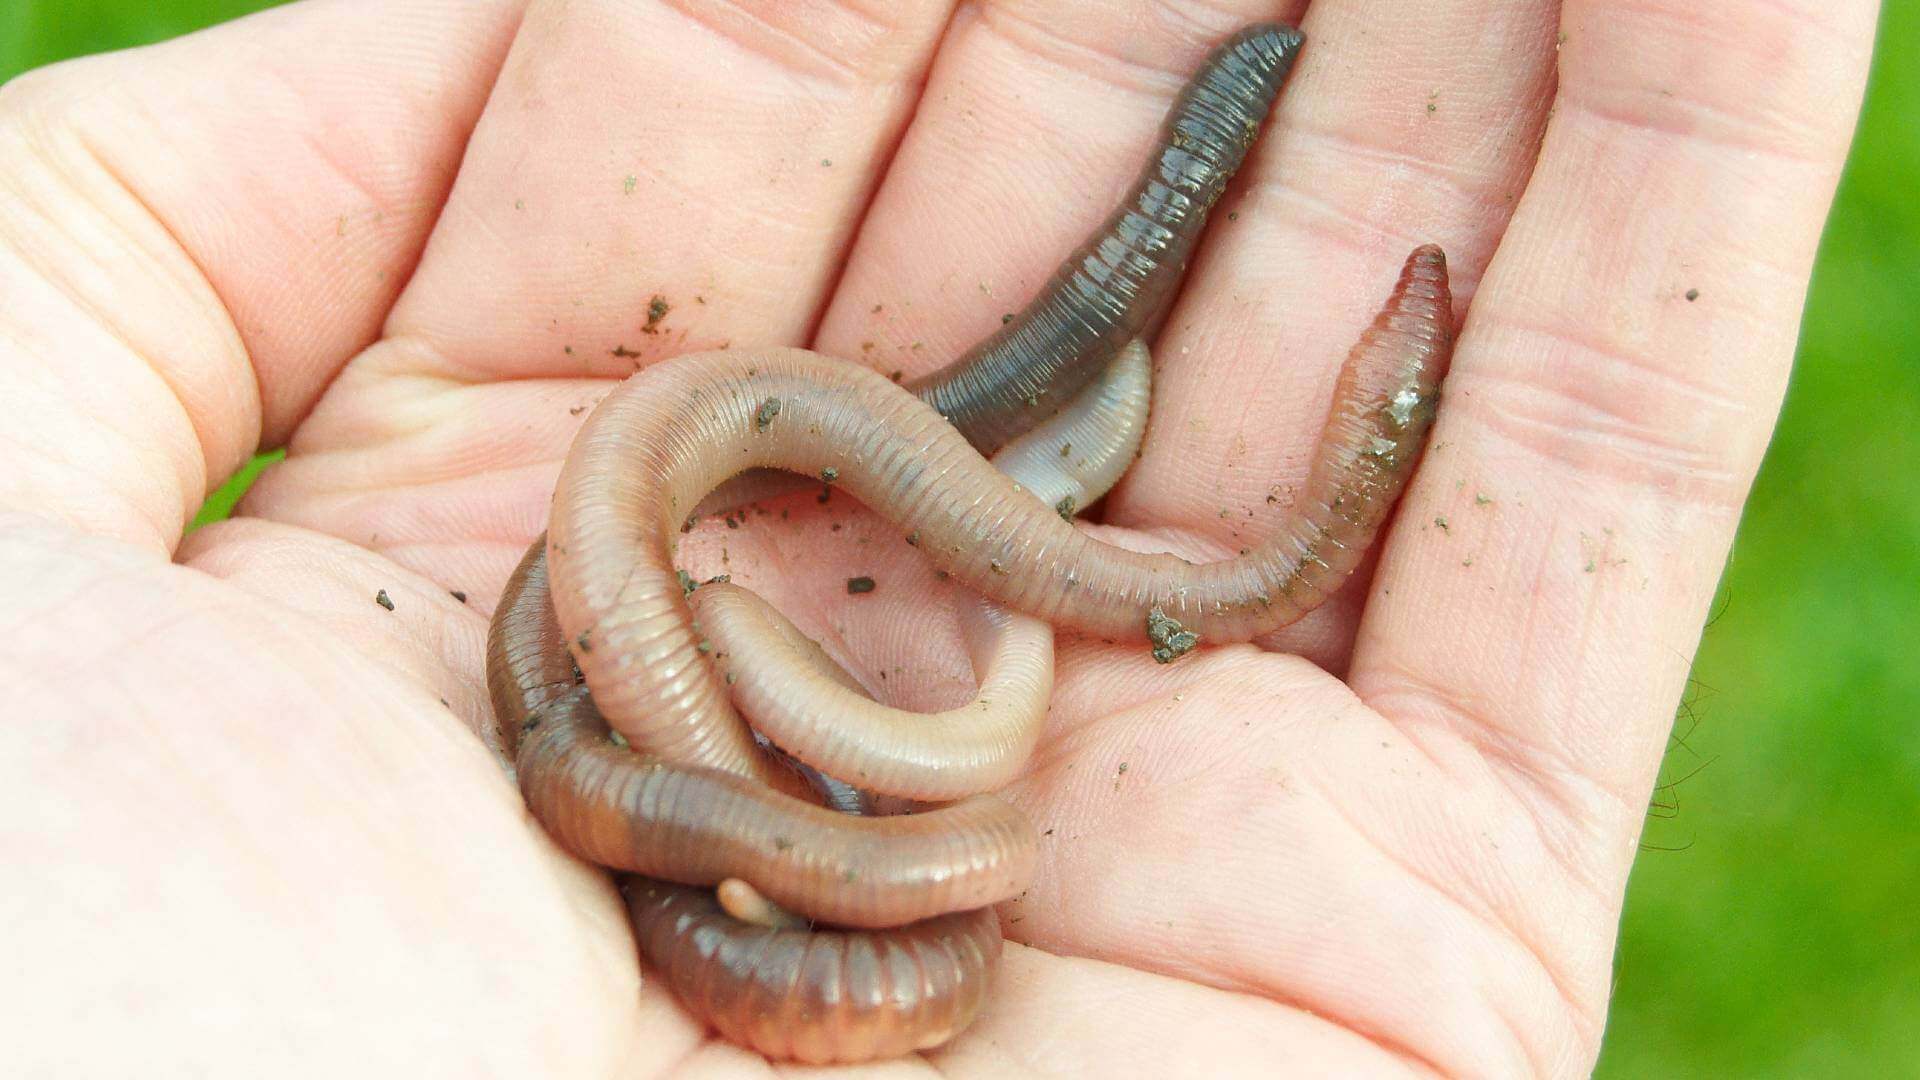 Wonderful worms